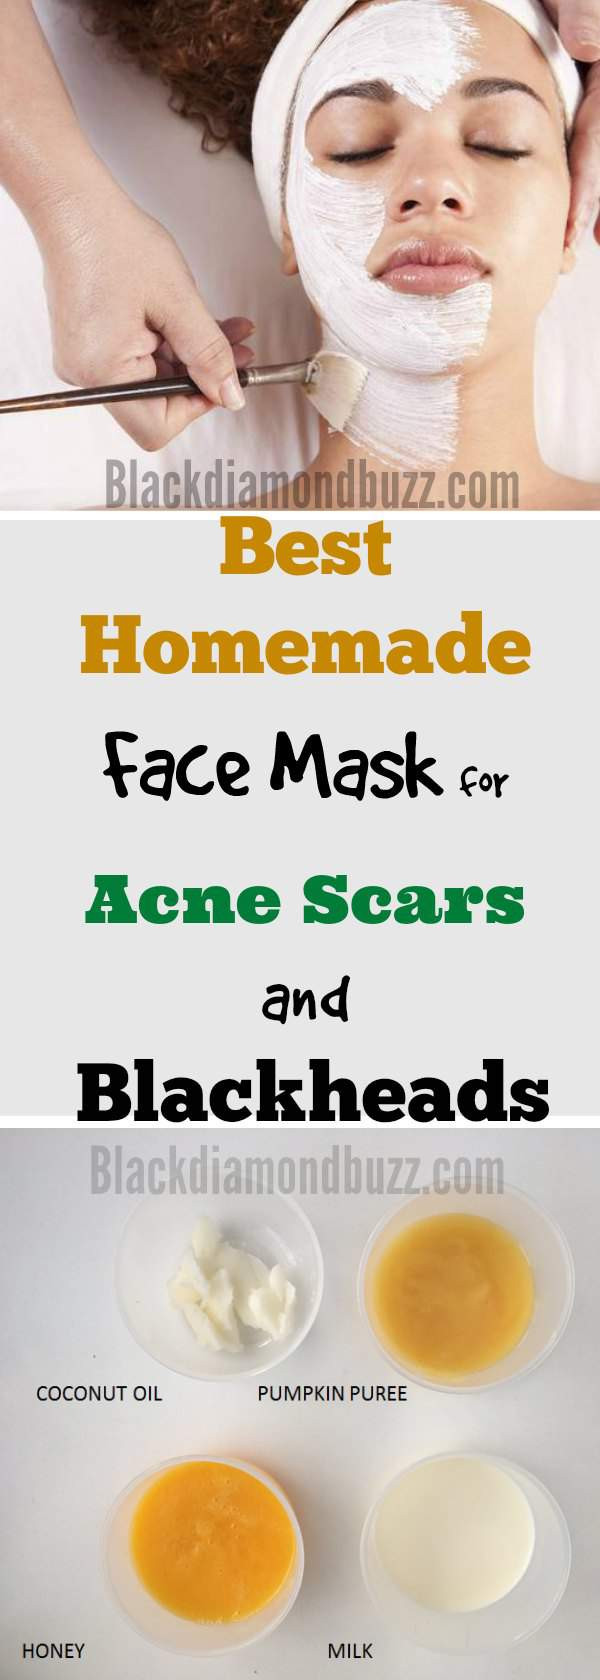 DIY Face Mask For Pimples
 DIY Face Mask for Acne 7 Best Homemade Face Masks